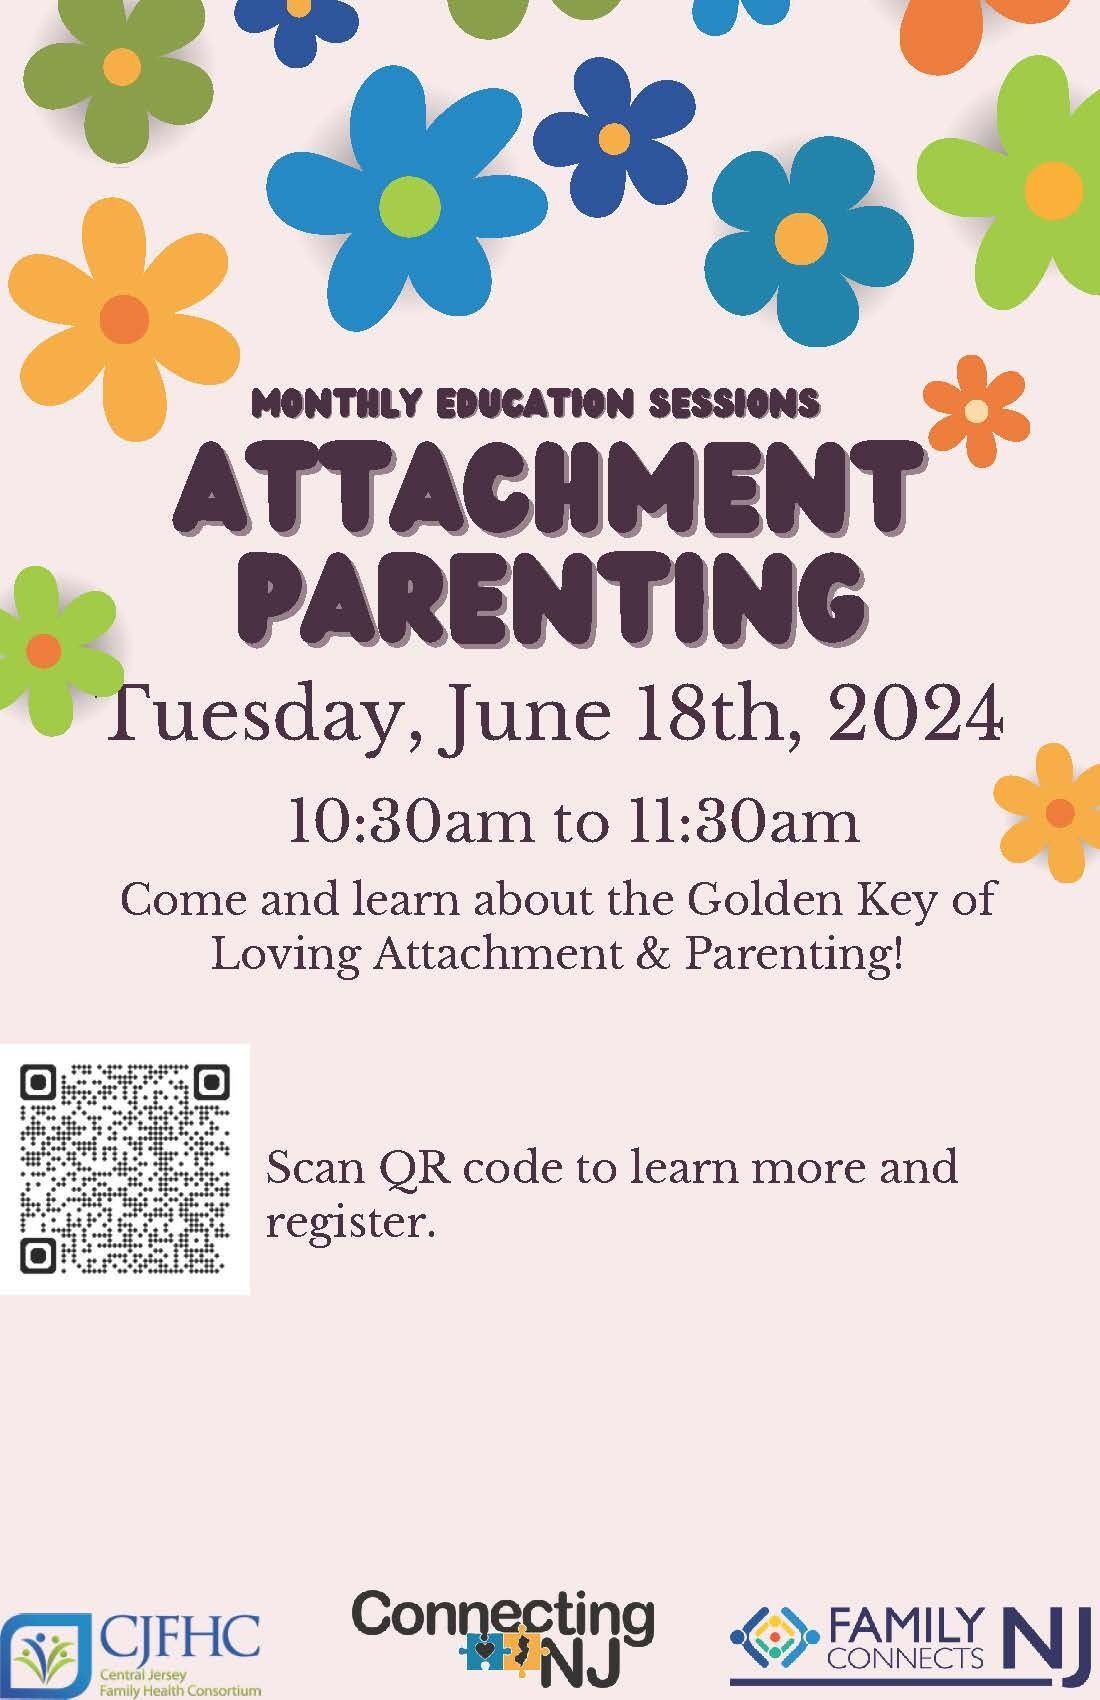 Connecting NJ Presents: "Attachment Parenting" Education Session